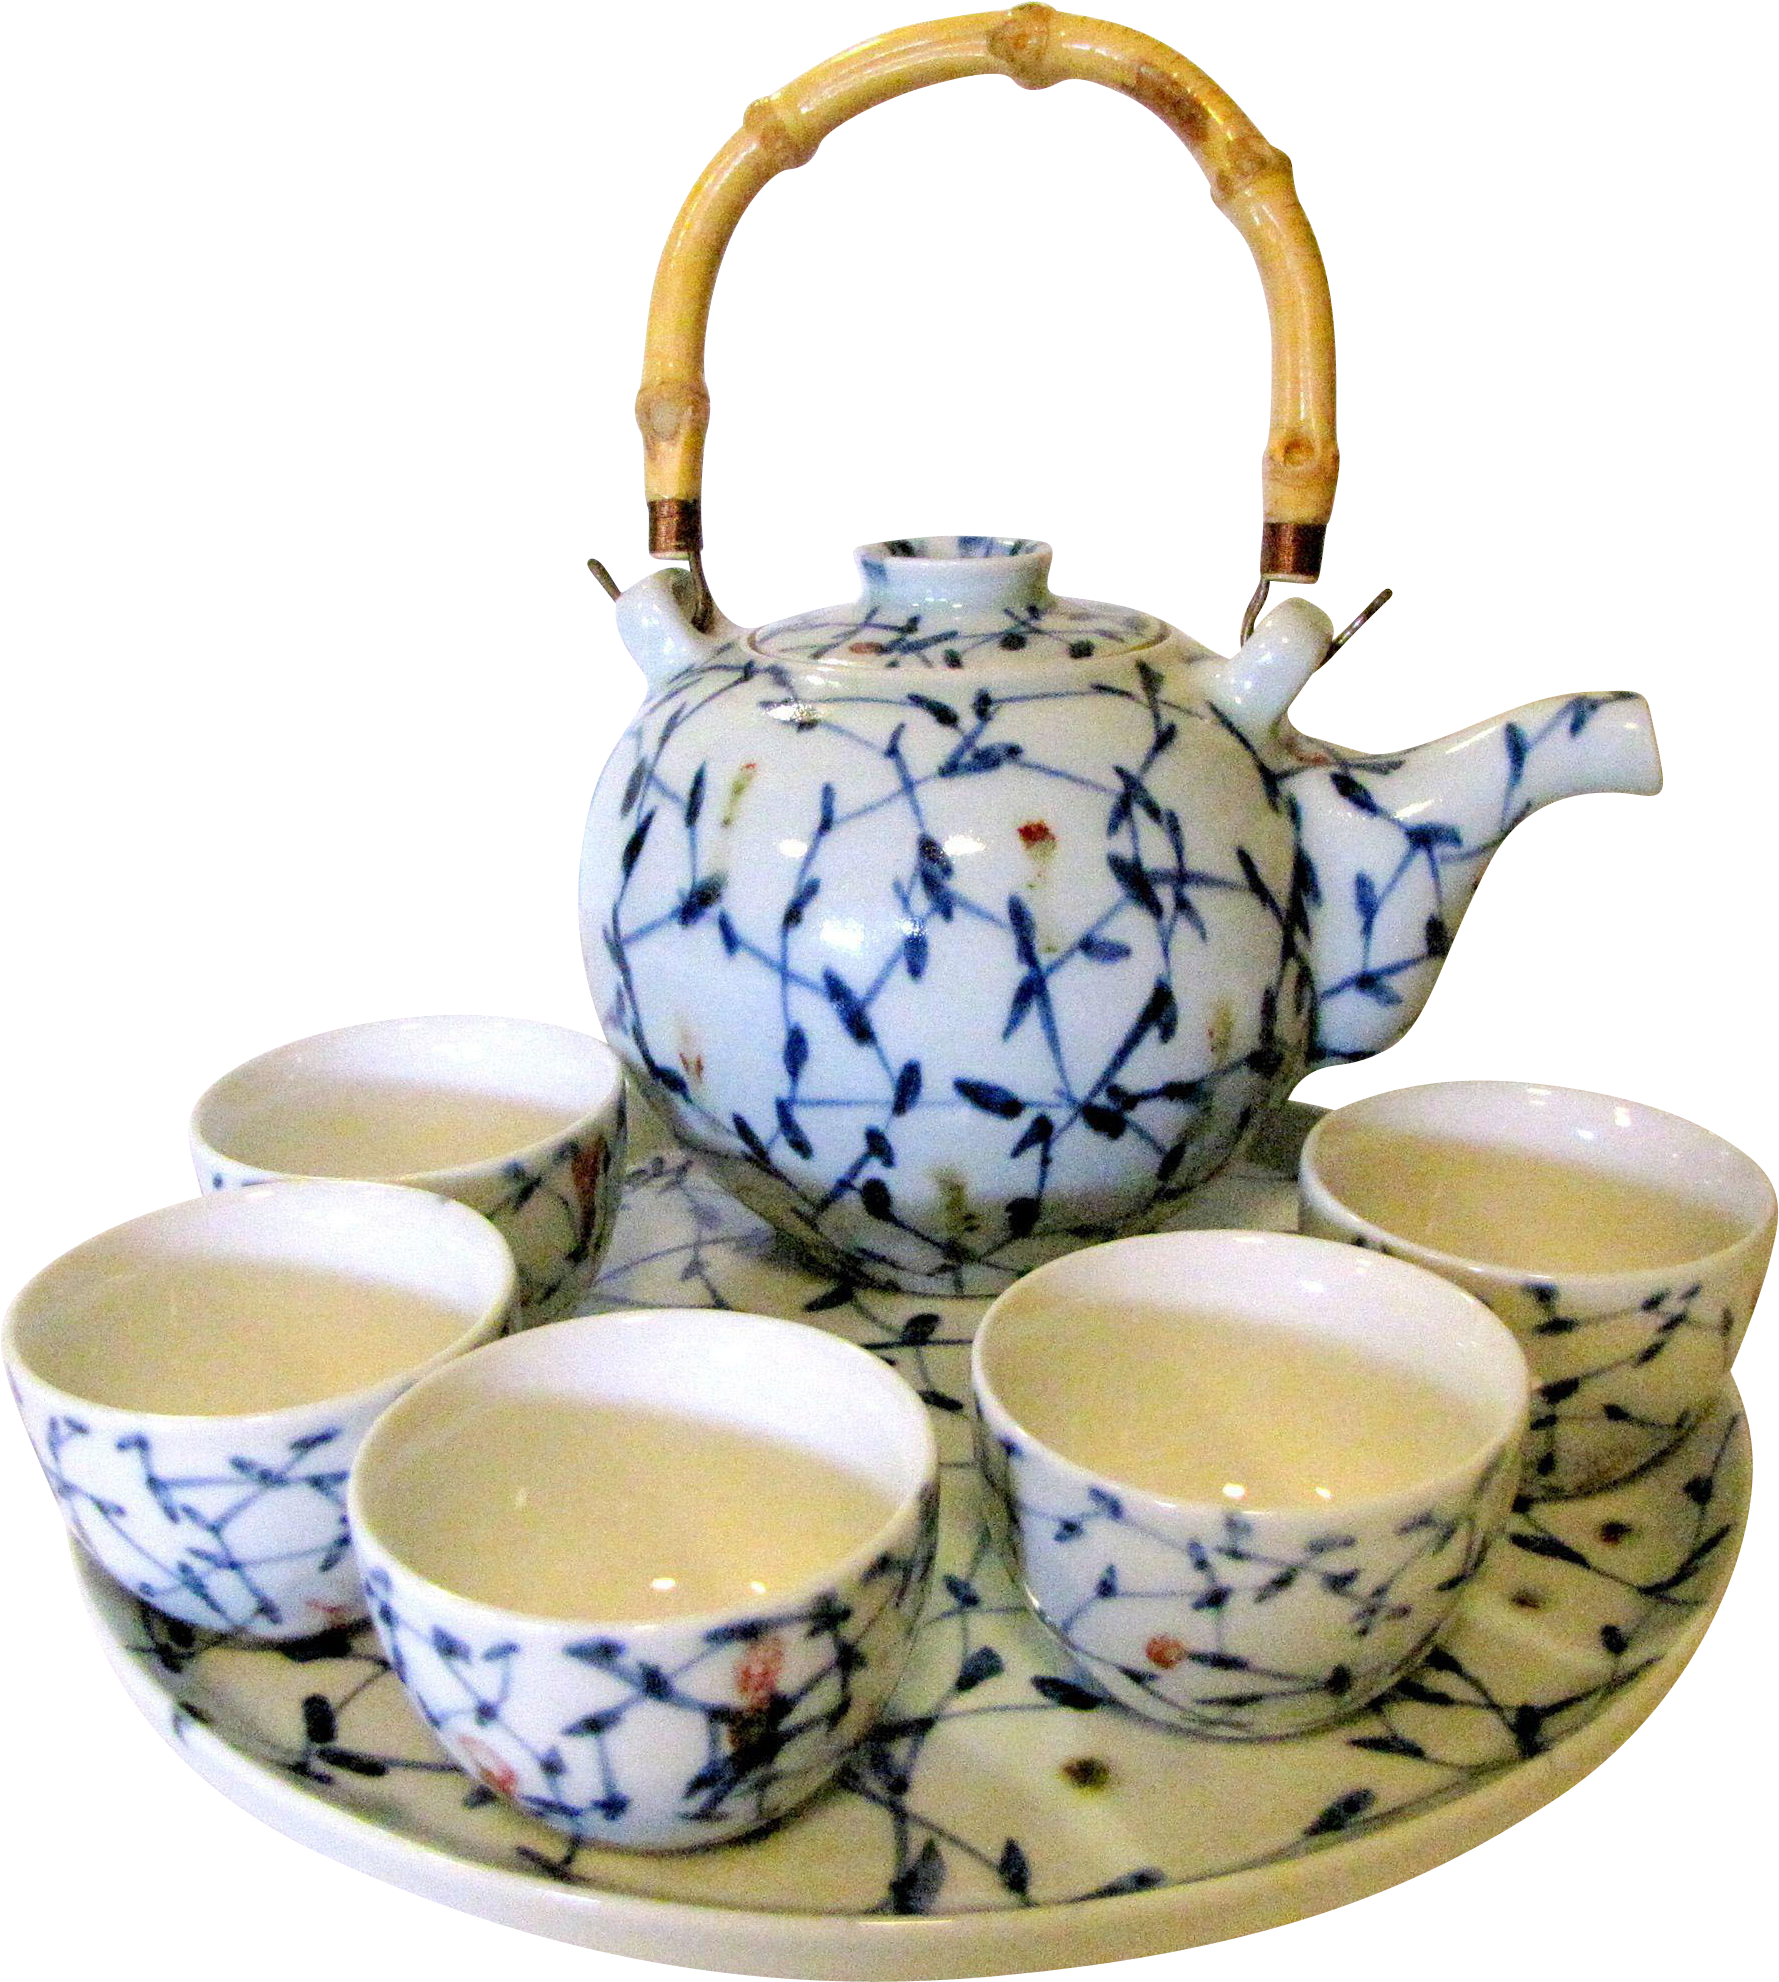 Signed Japanese Tea Set W/ 5 Cups & Underplate Found - Tea Set (1981x1981)